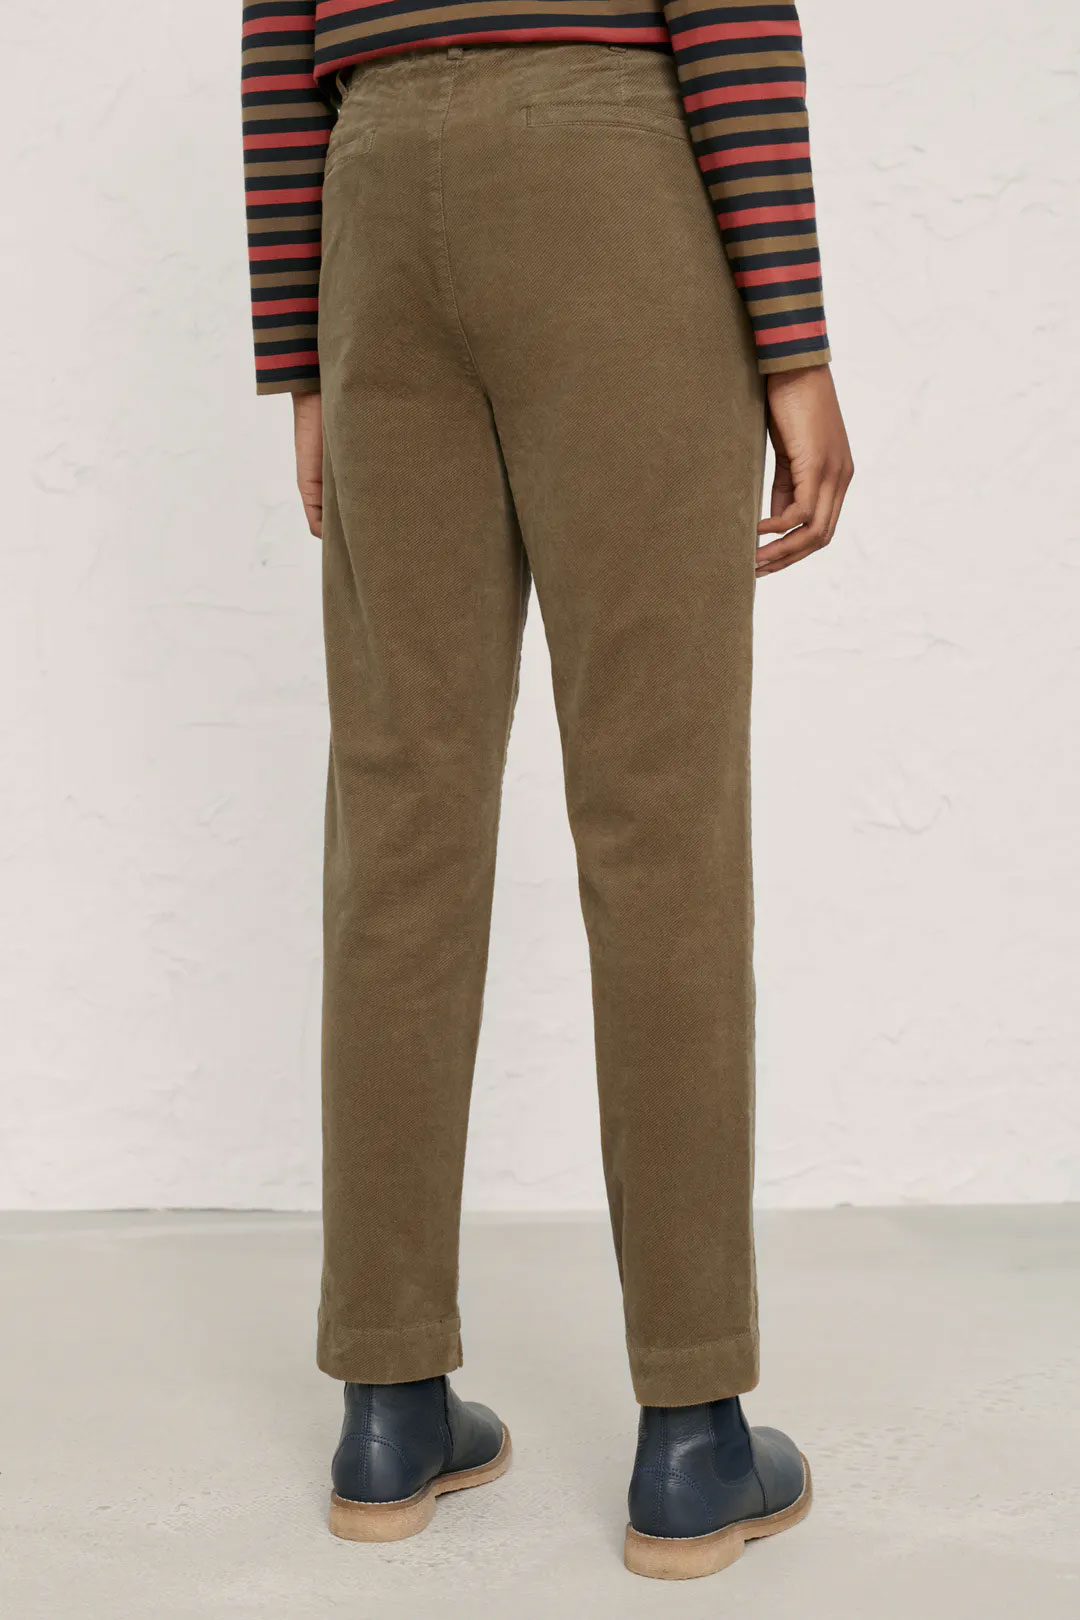 SEASALT Hose Crackington Trousers, Farbe: Dark Seagrass , Größe 52